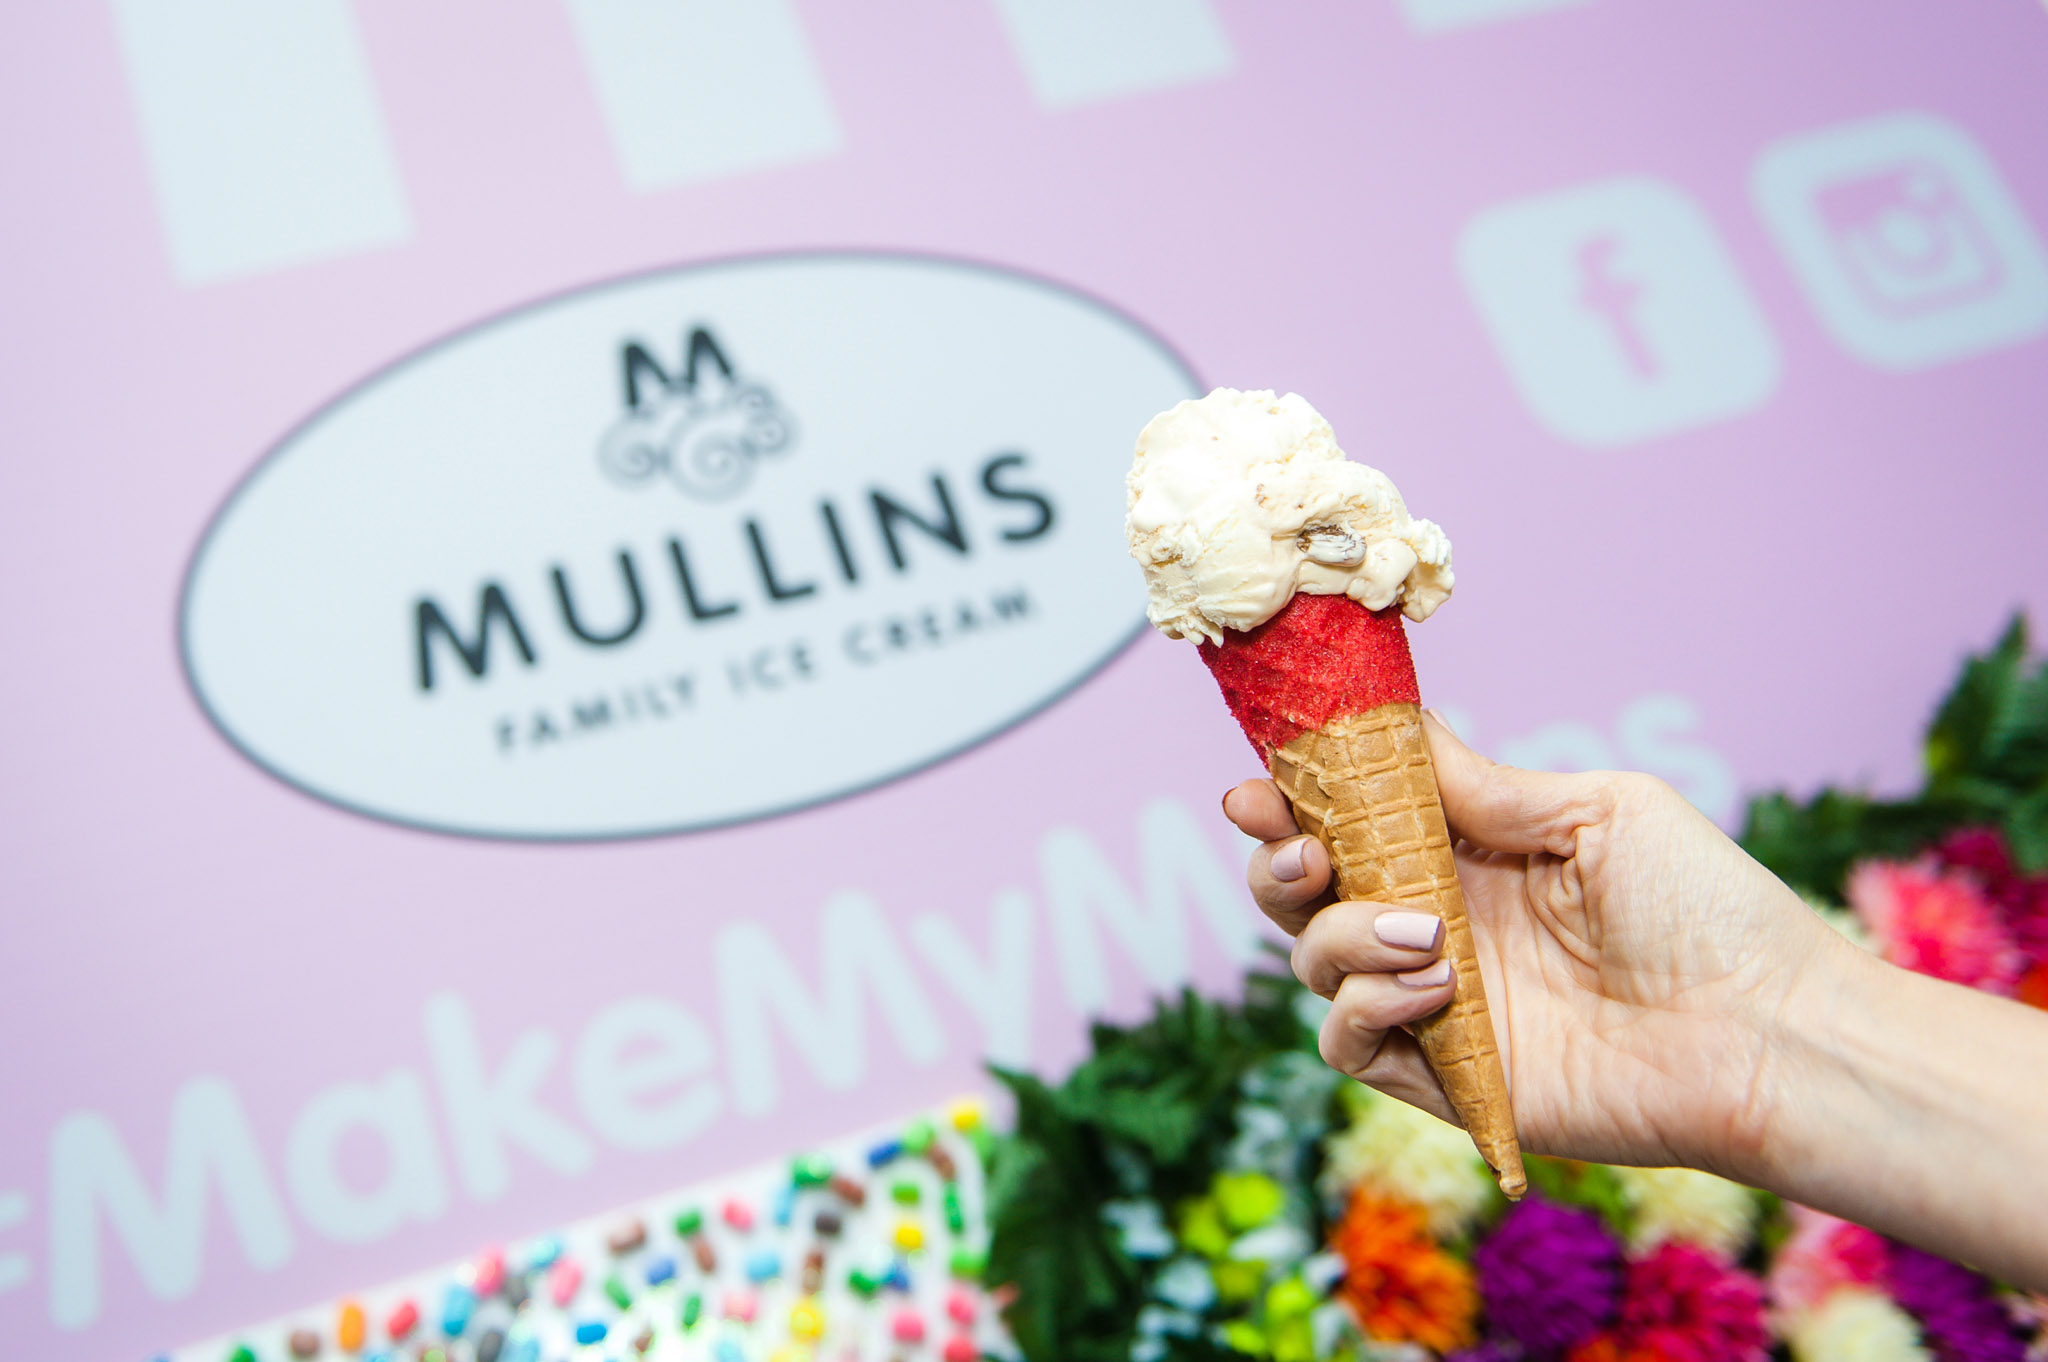 Mullins Honeycomb Ice Cream featuring the Mullins Logo